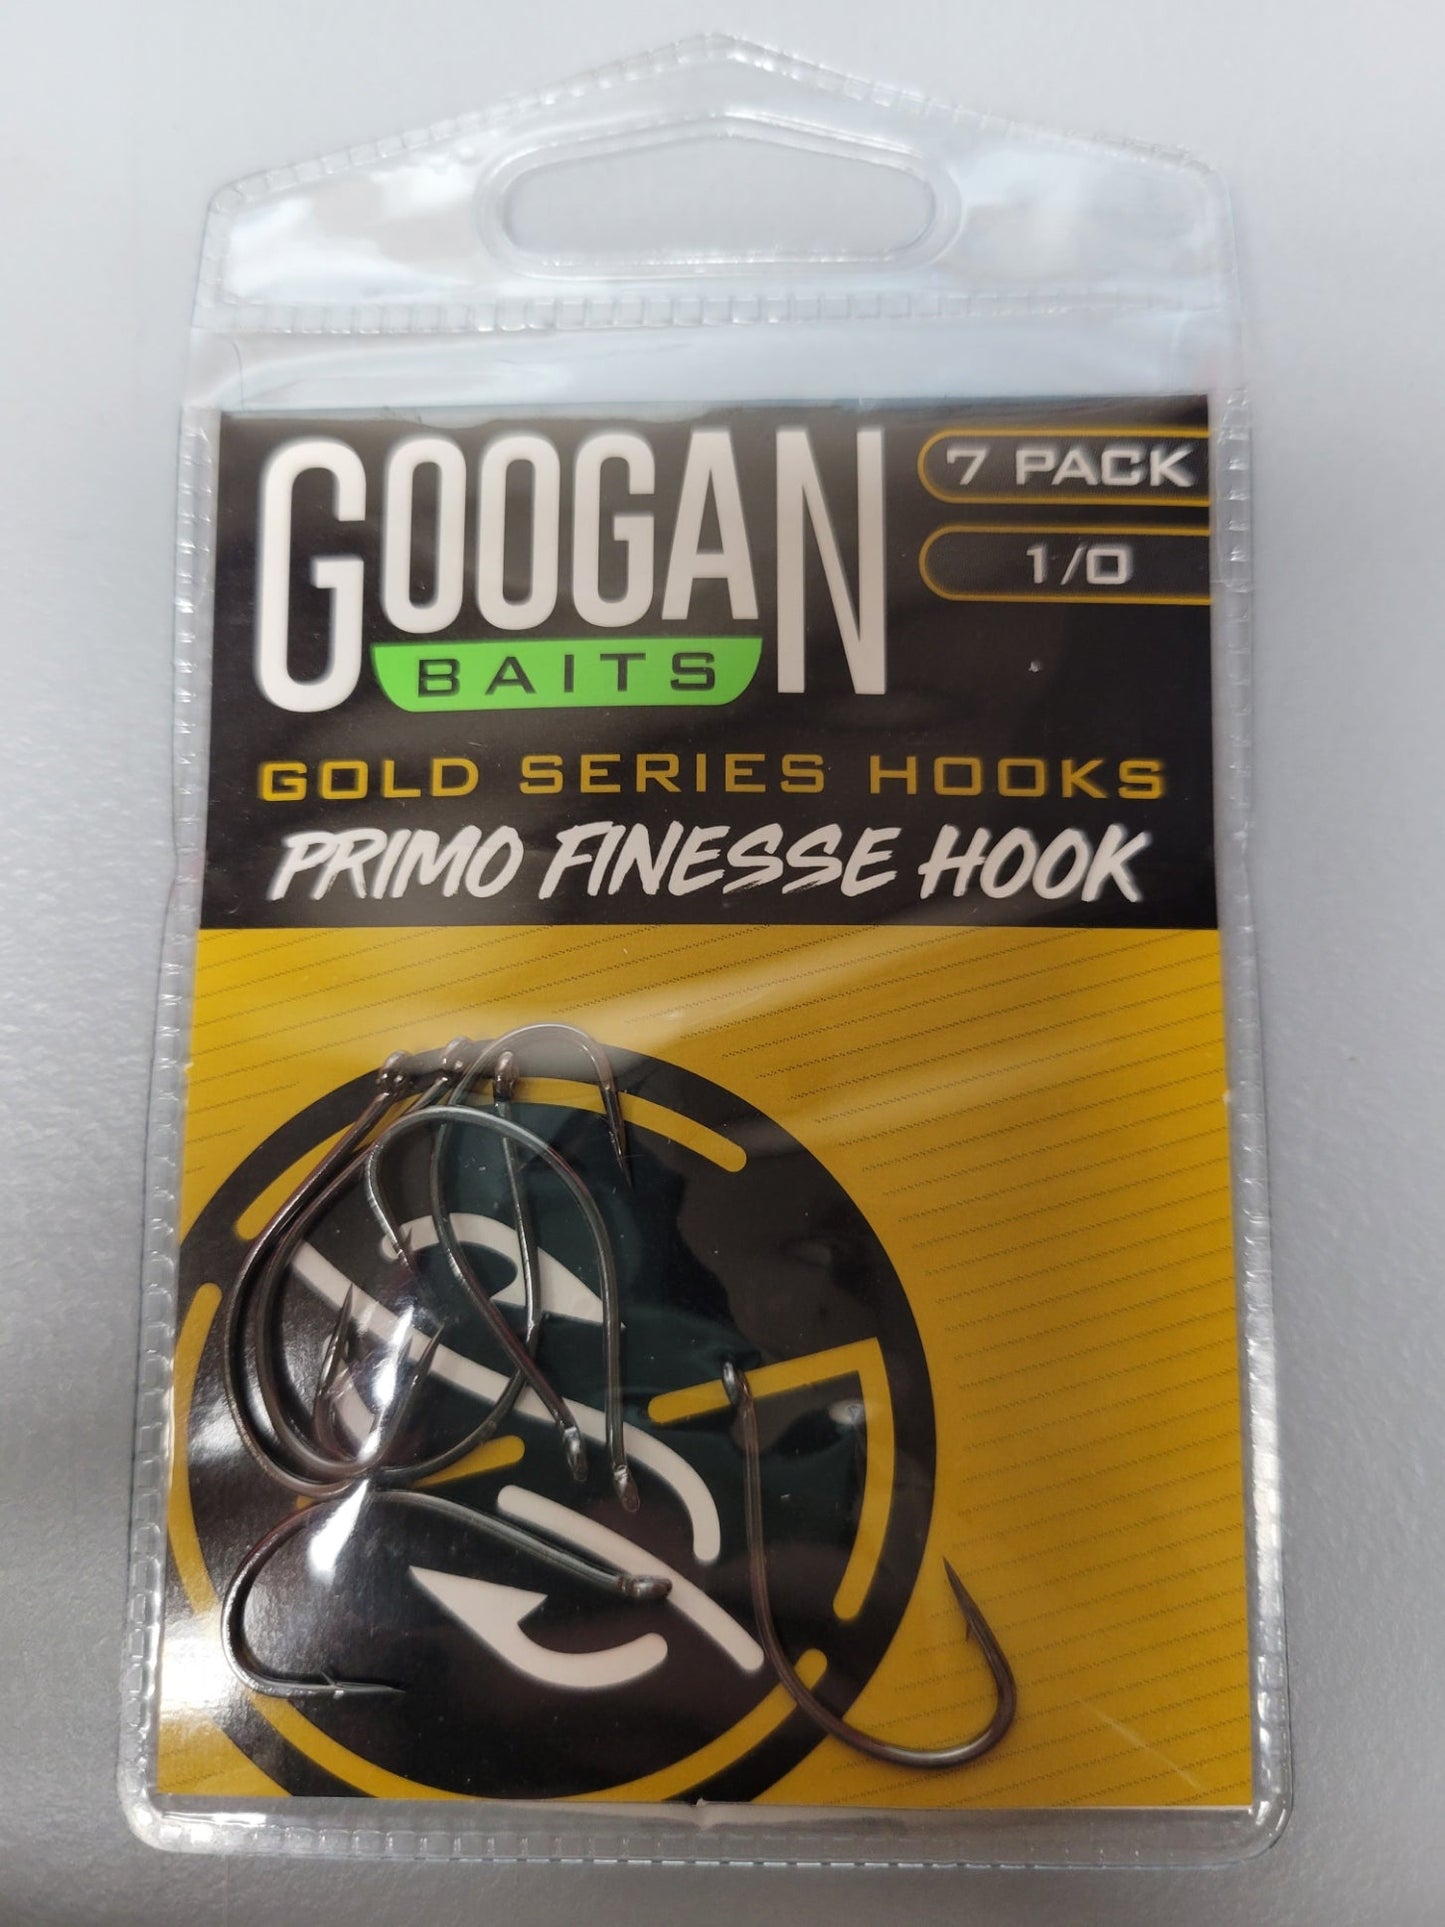 Googan Gold Series Hooks 1/0